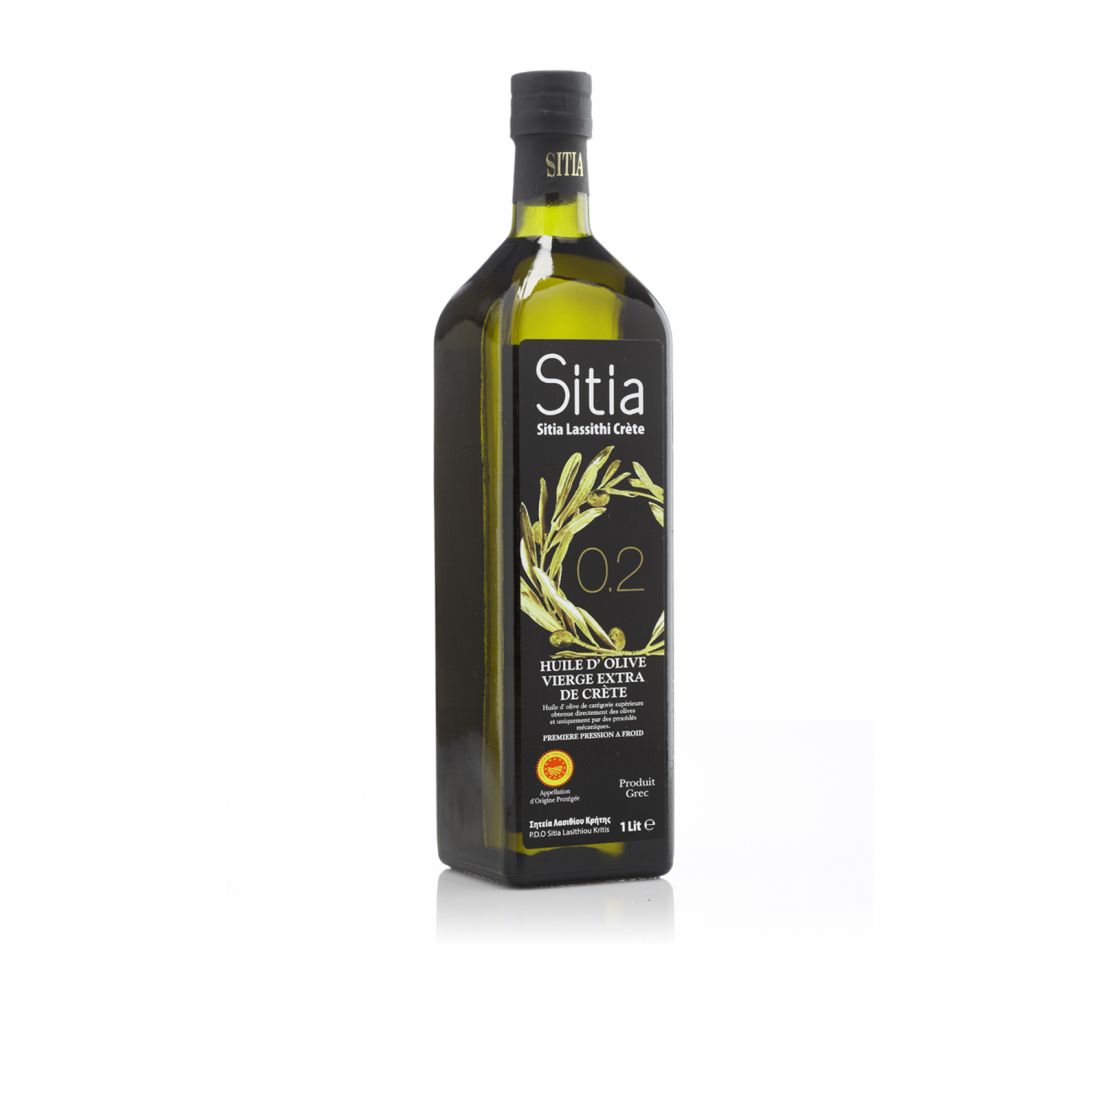 Оливковое масло SITIA Premium Gold - 1 л 0.2 экстра вирджин PDO стекло